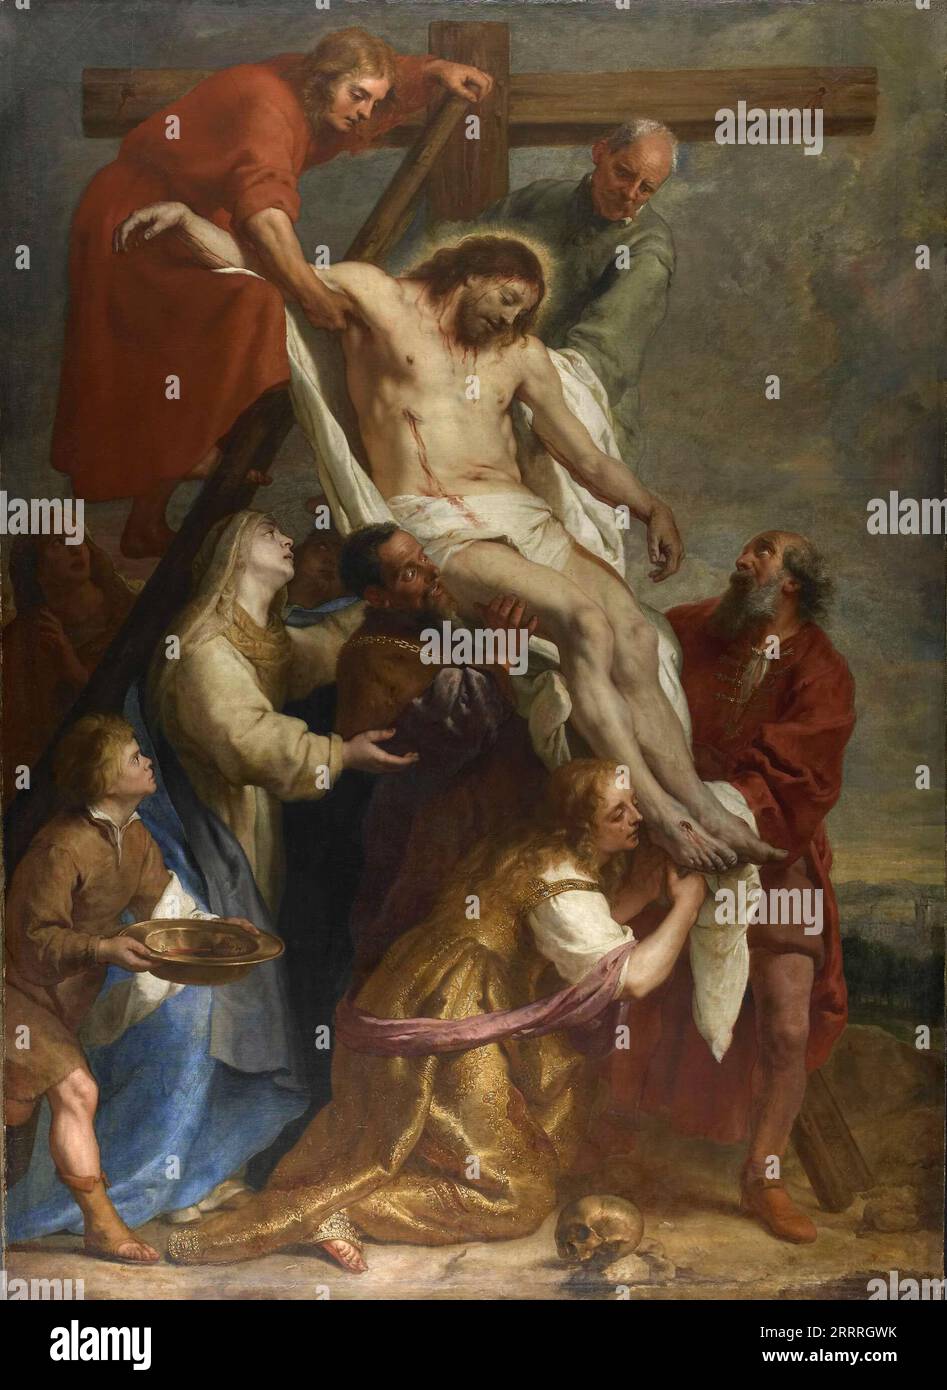 The Descent from the Cross, Gaspar de Crayer, c. 1640 - c. 1650 oil on canvas, Stock Photo